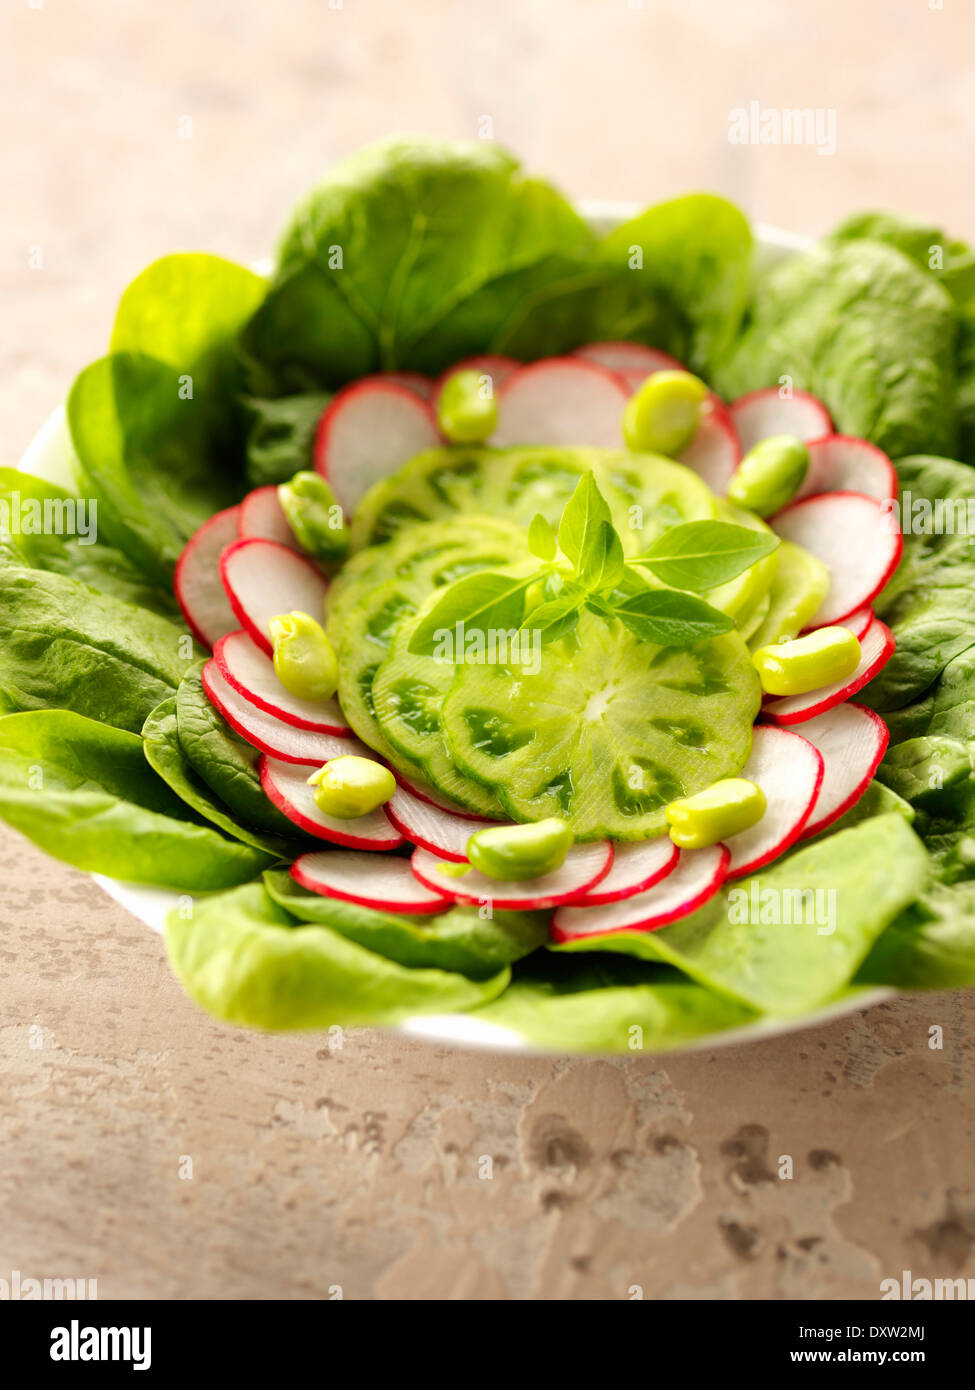 Green tomato,radish and spinach salad Stock Photo